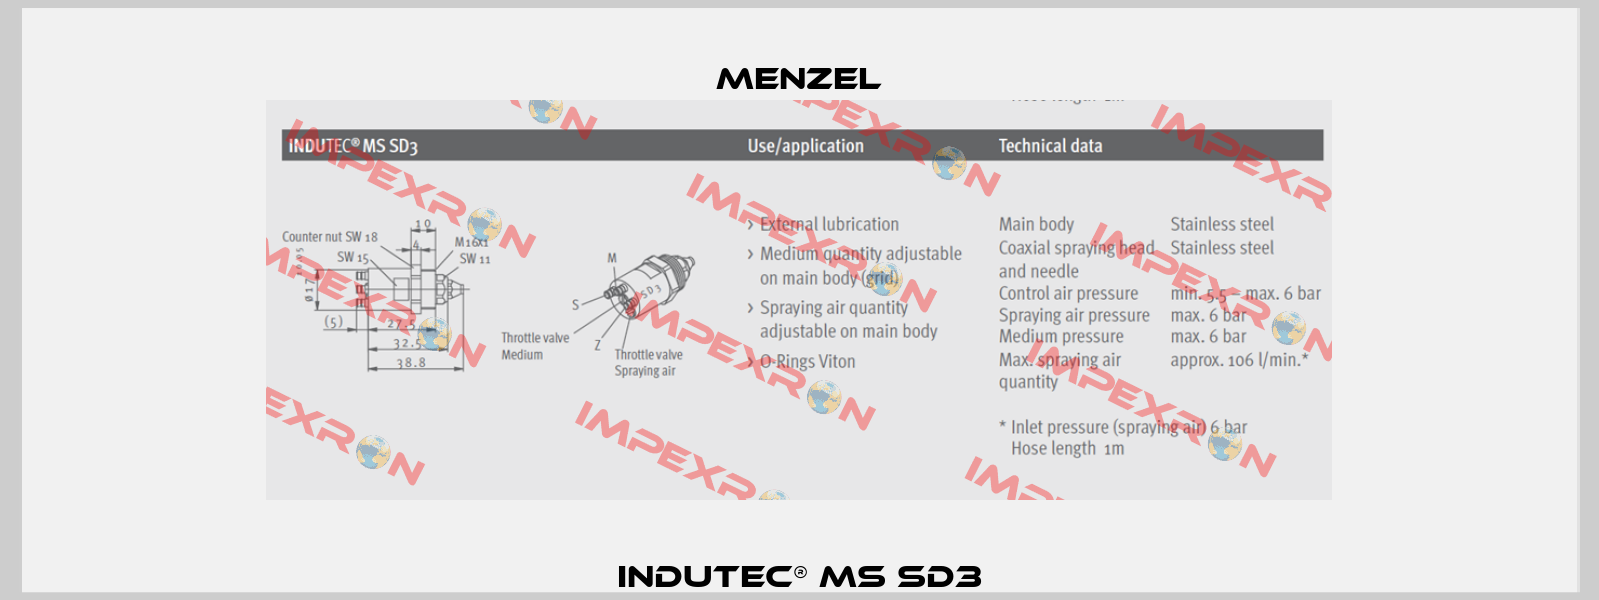 INDUTEC® MS SD3 Menzel